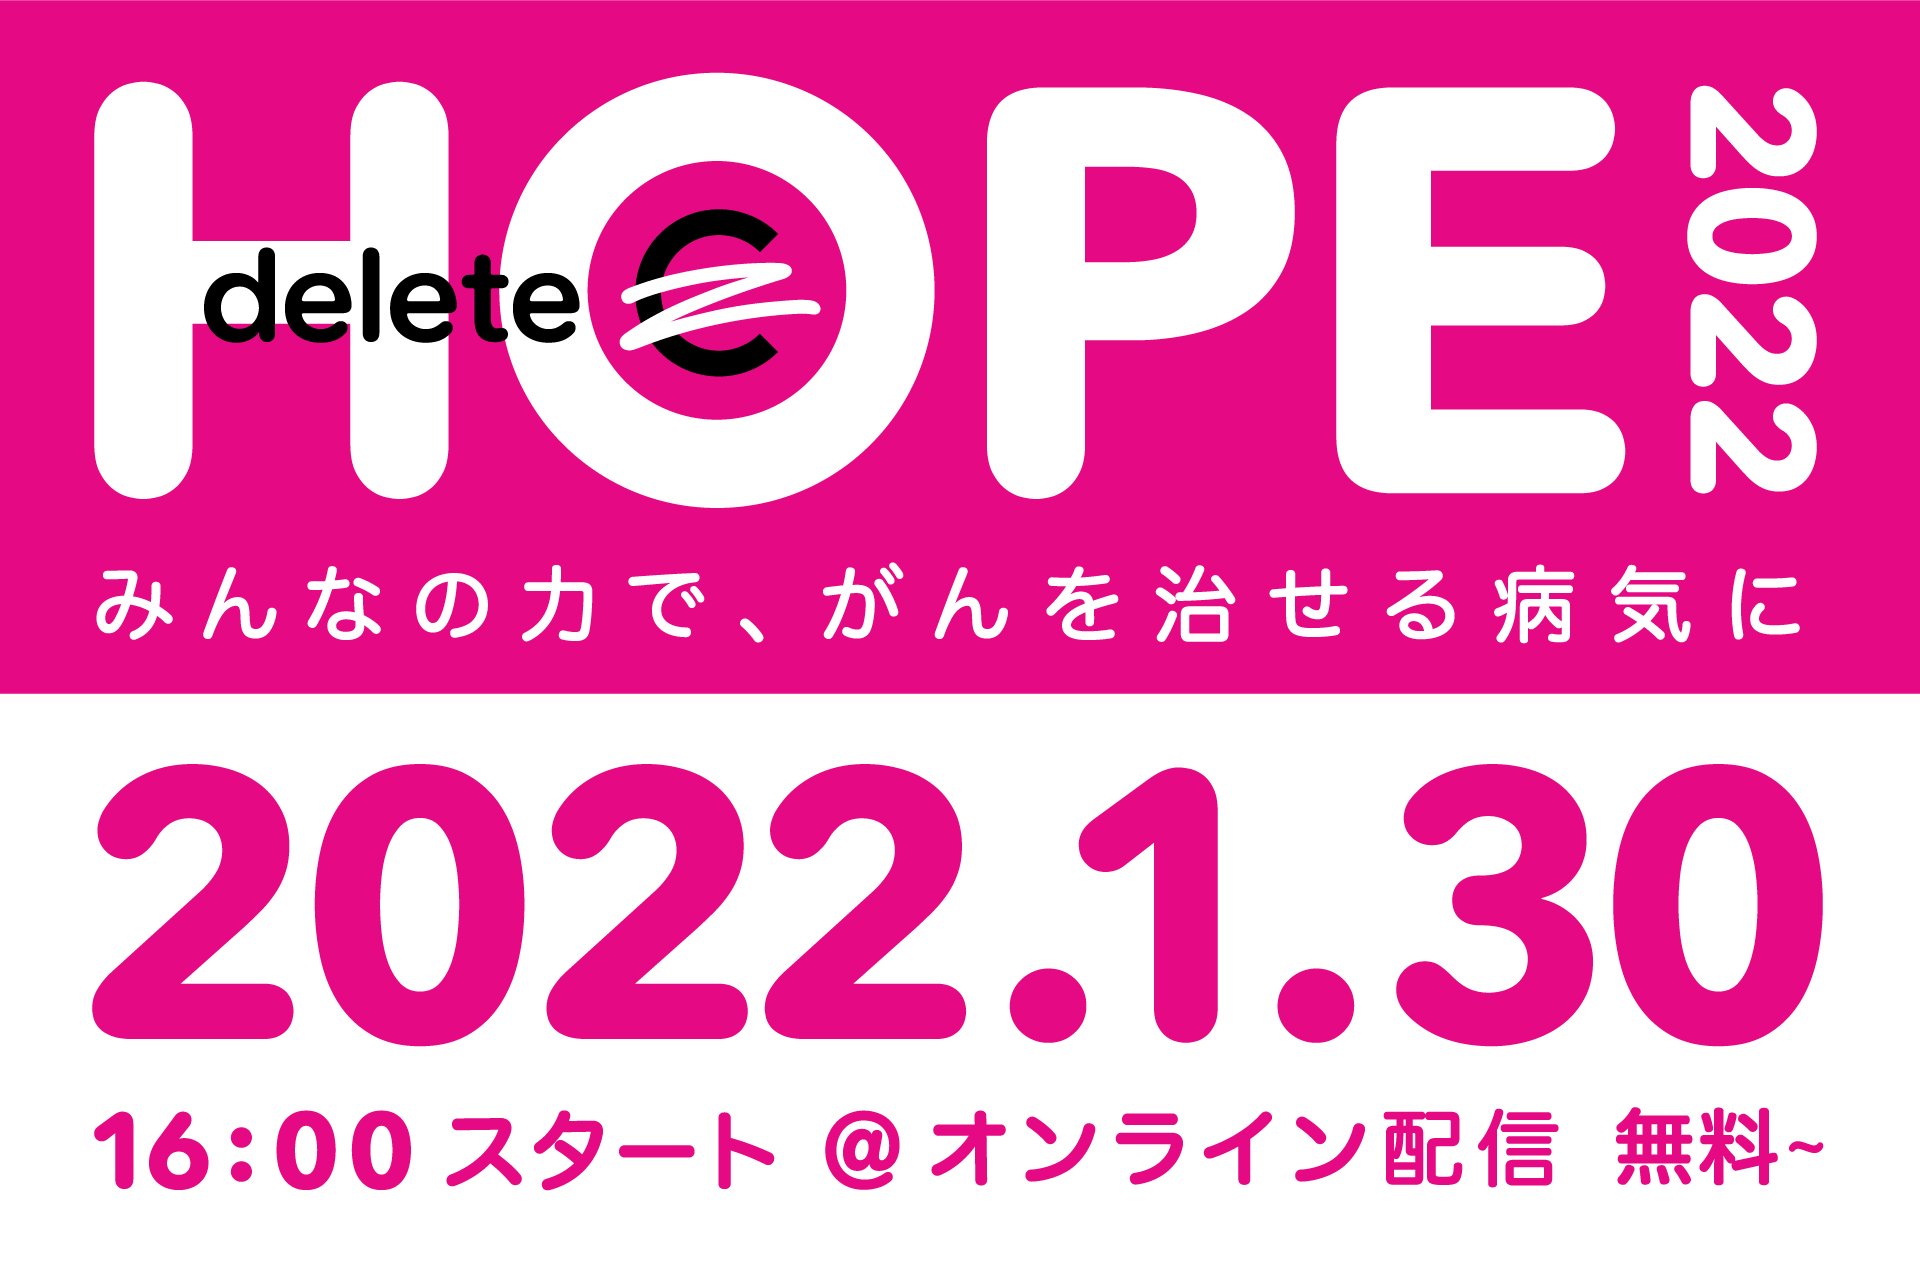 deleteC 2022-HOPE-協賛のお知らせ